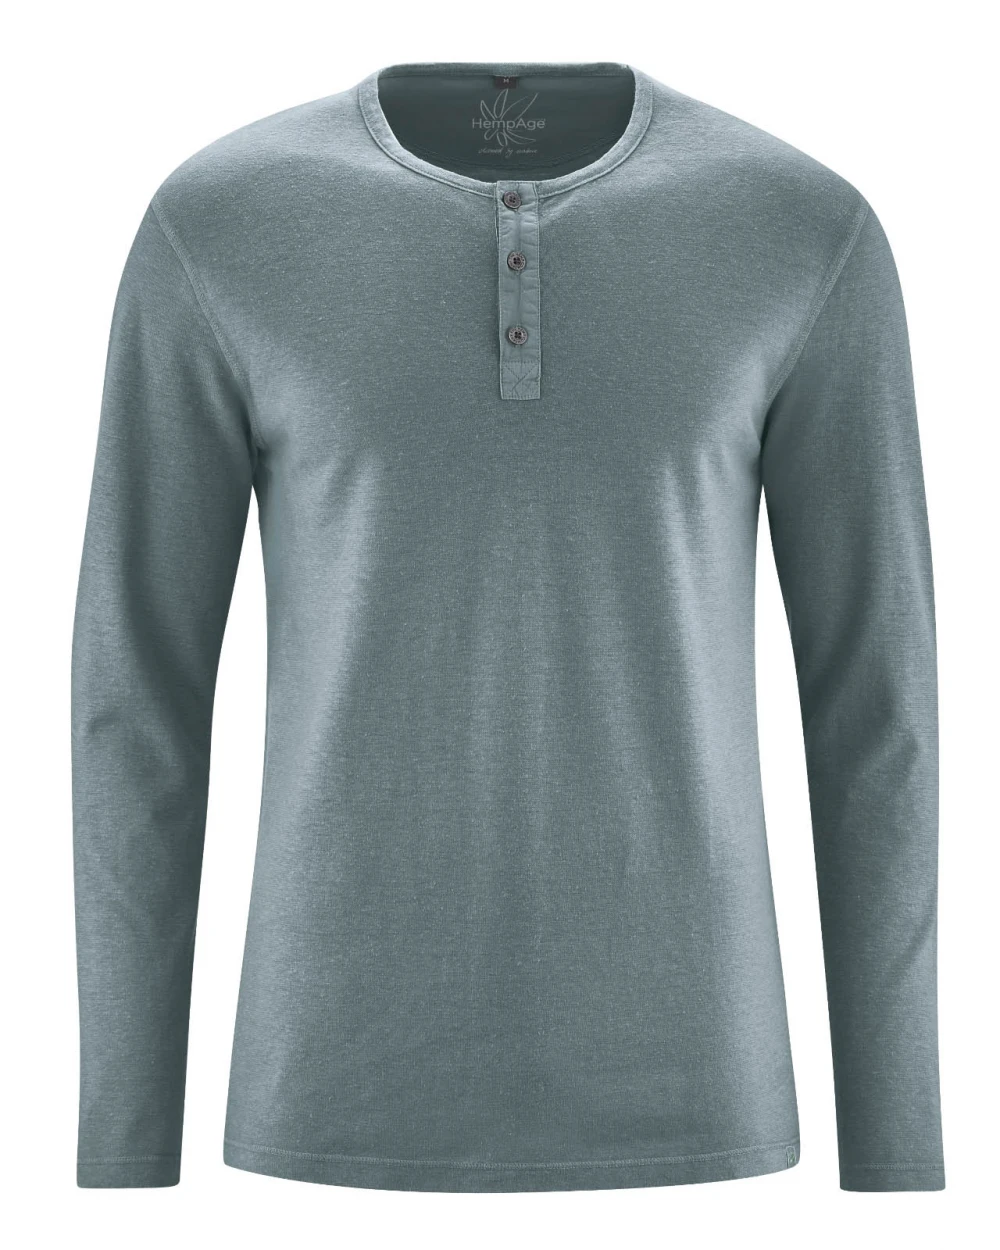 Henley shirt steel grey in hemp and organic cotton